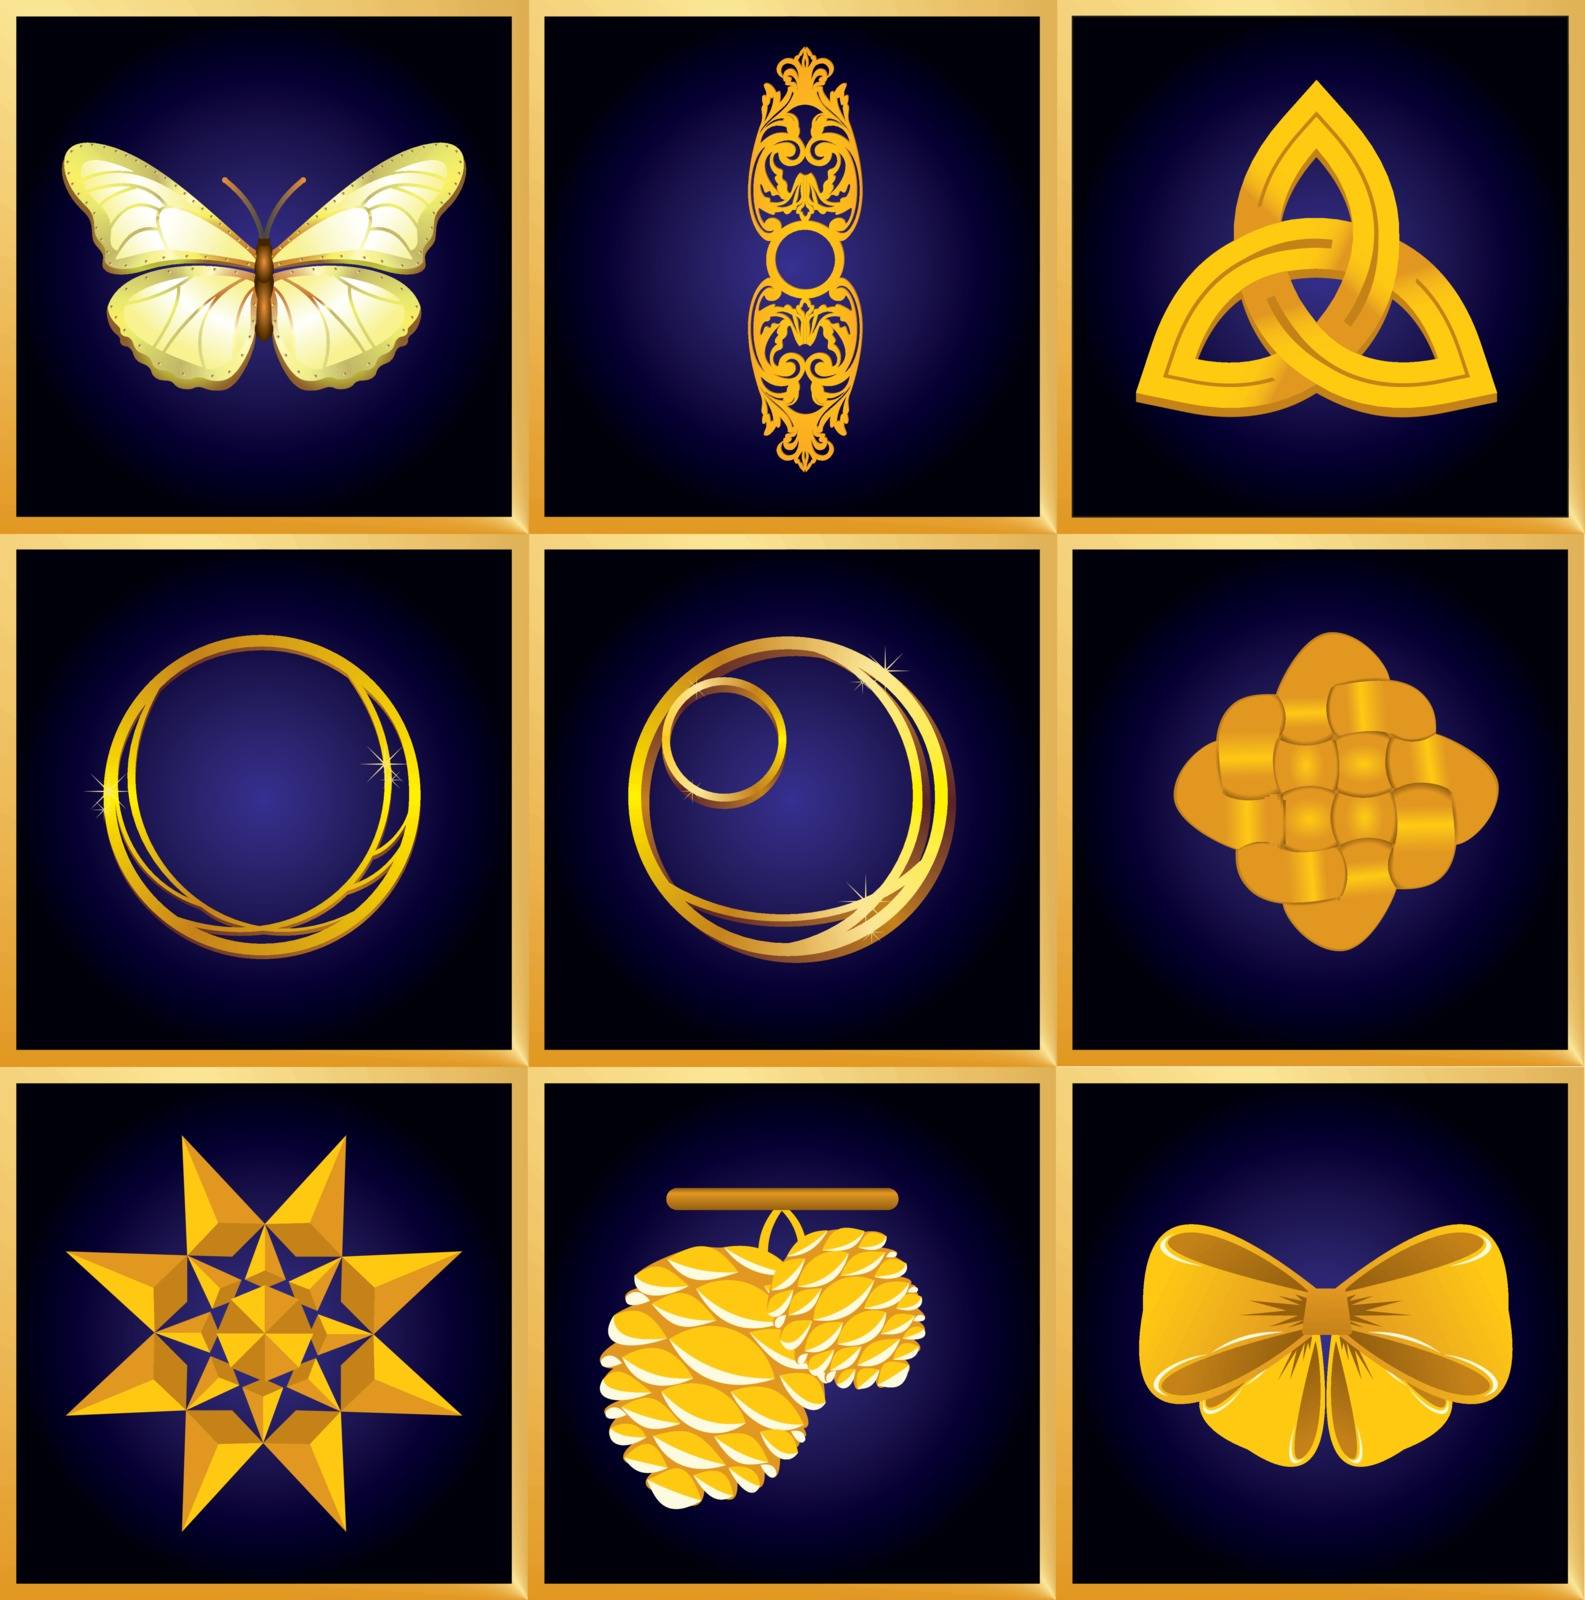 Golden objekts on the dark blue background